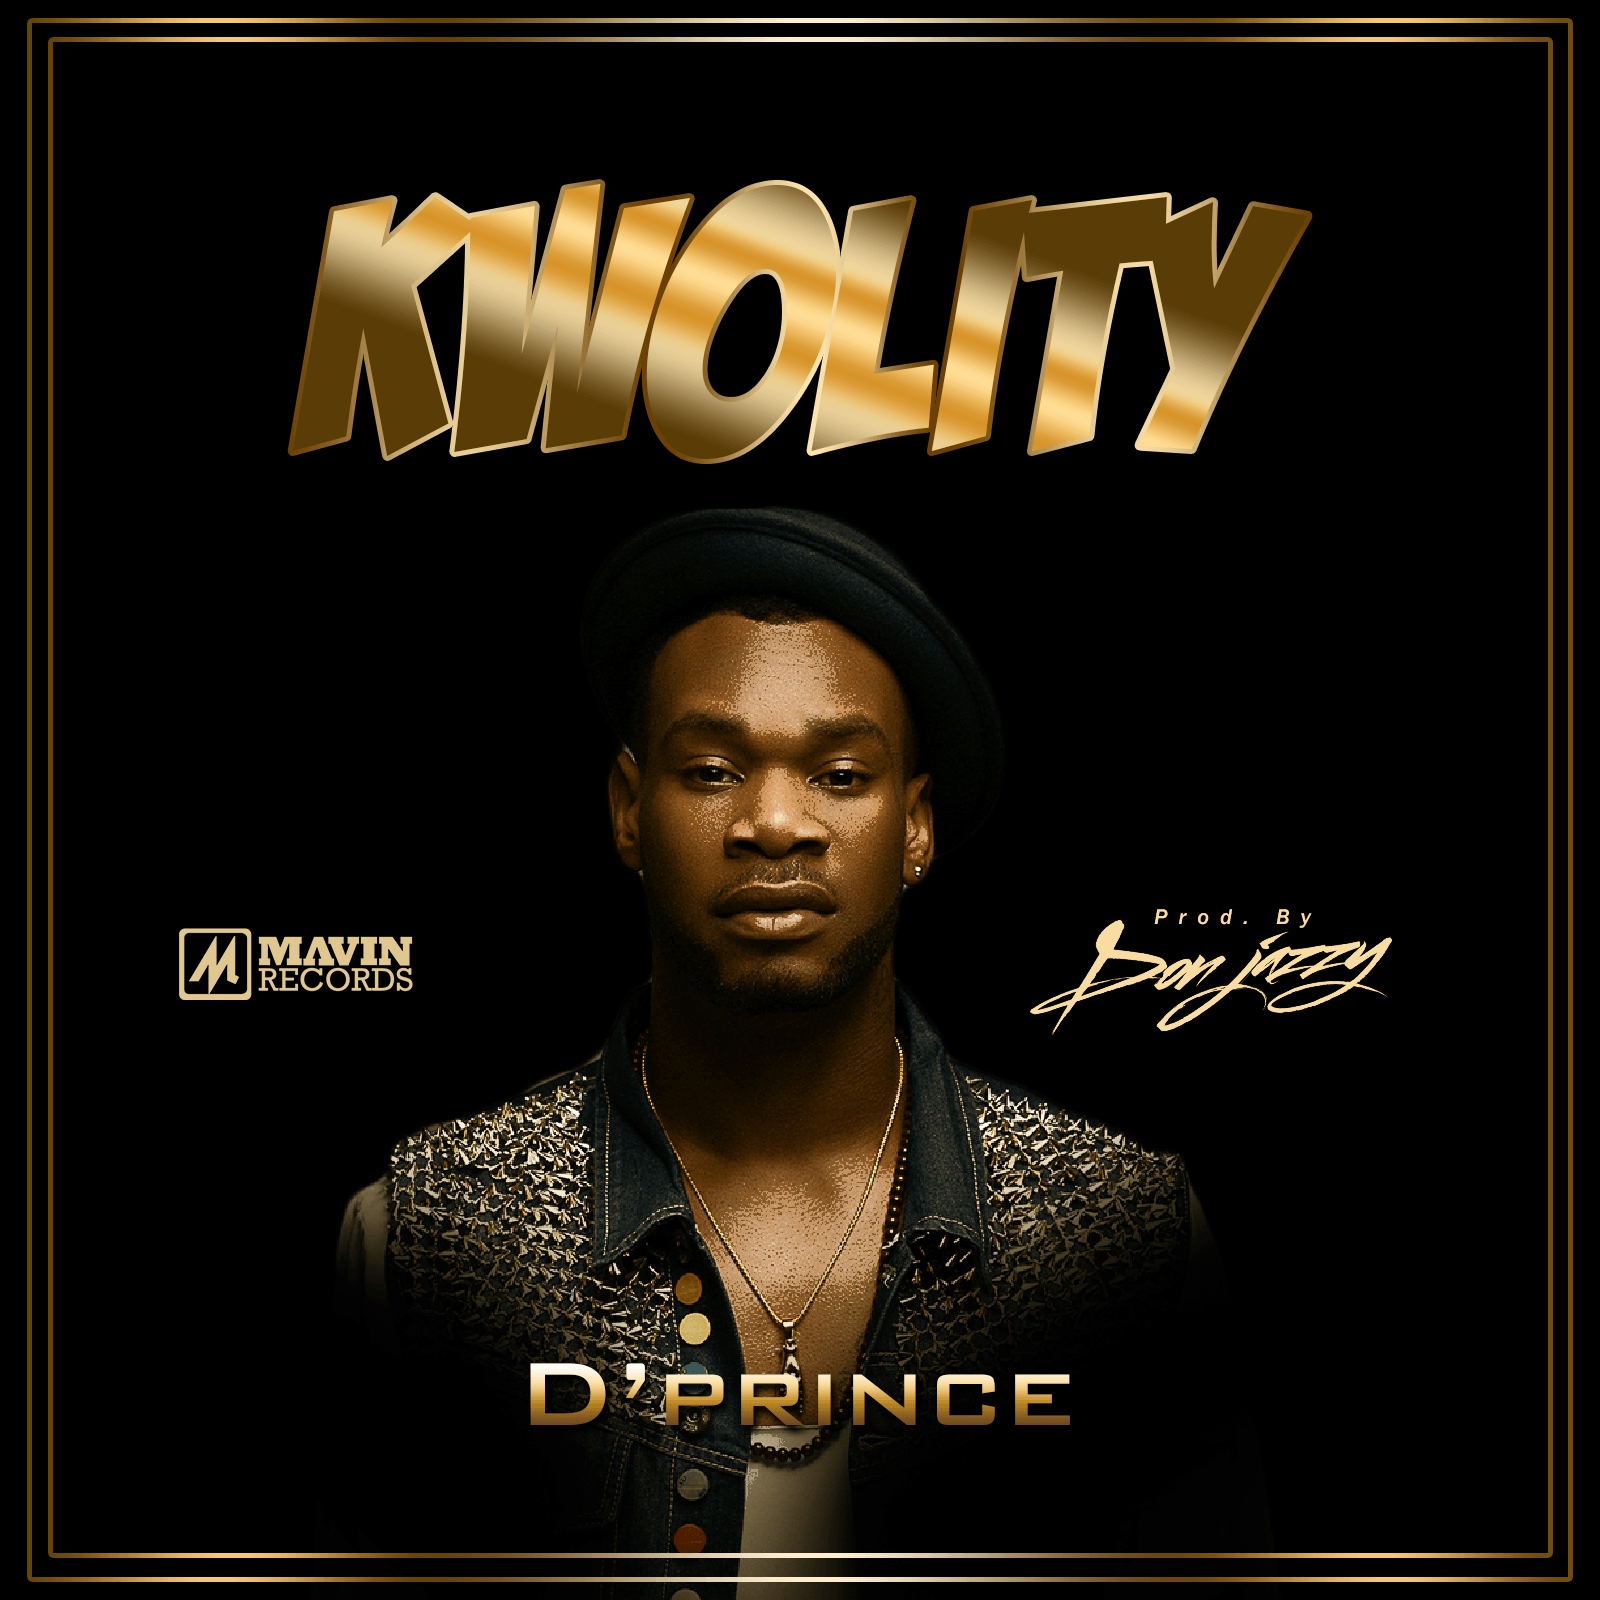 D'Prince - KWOLITY (prod. by Don Jazzy) Artwork | AceWorldTeam.com